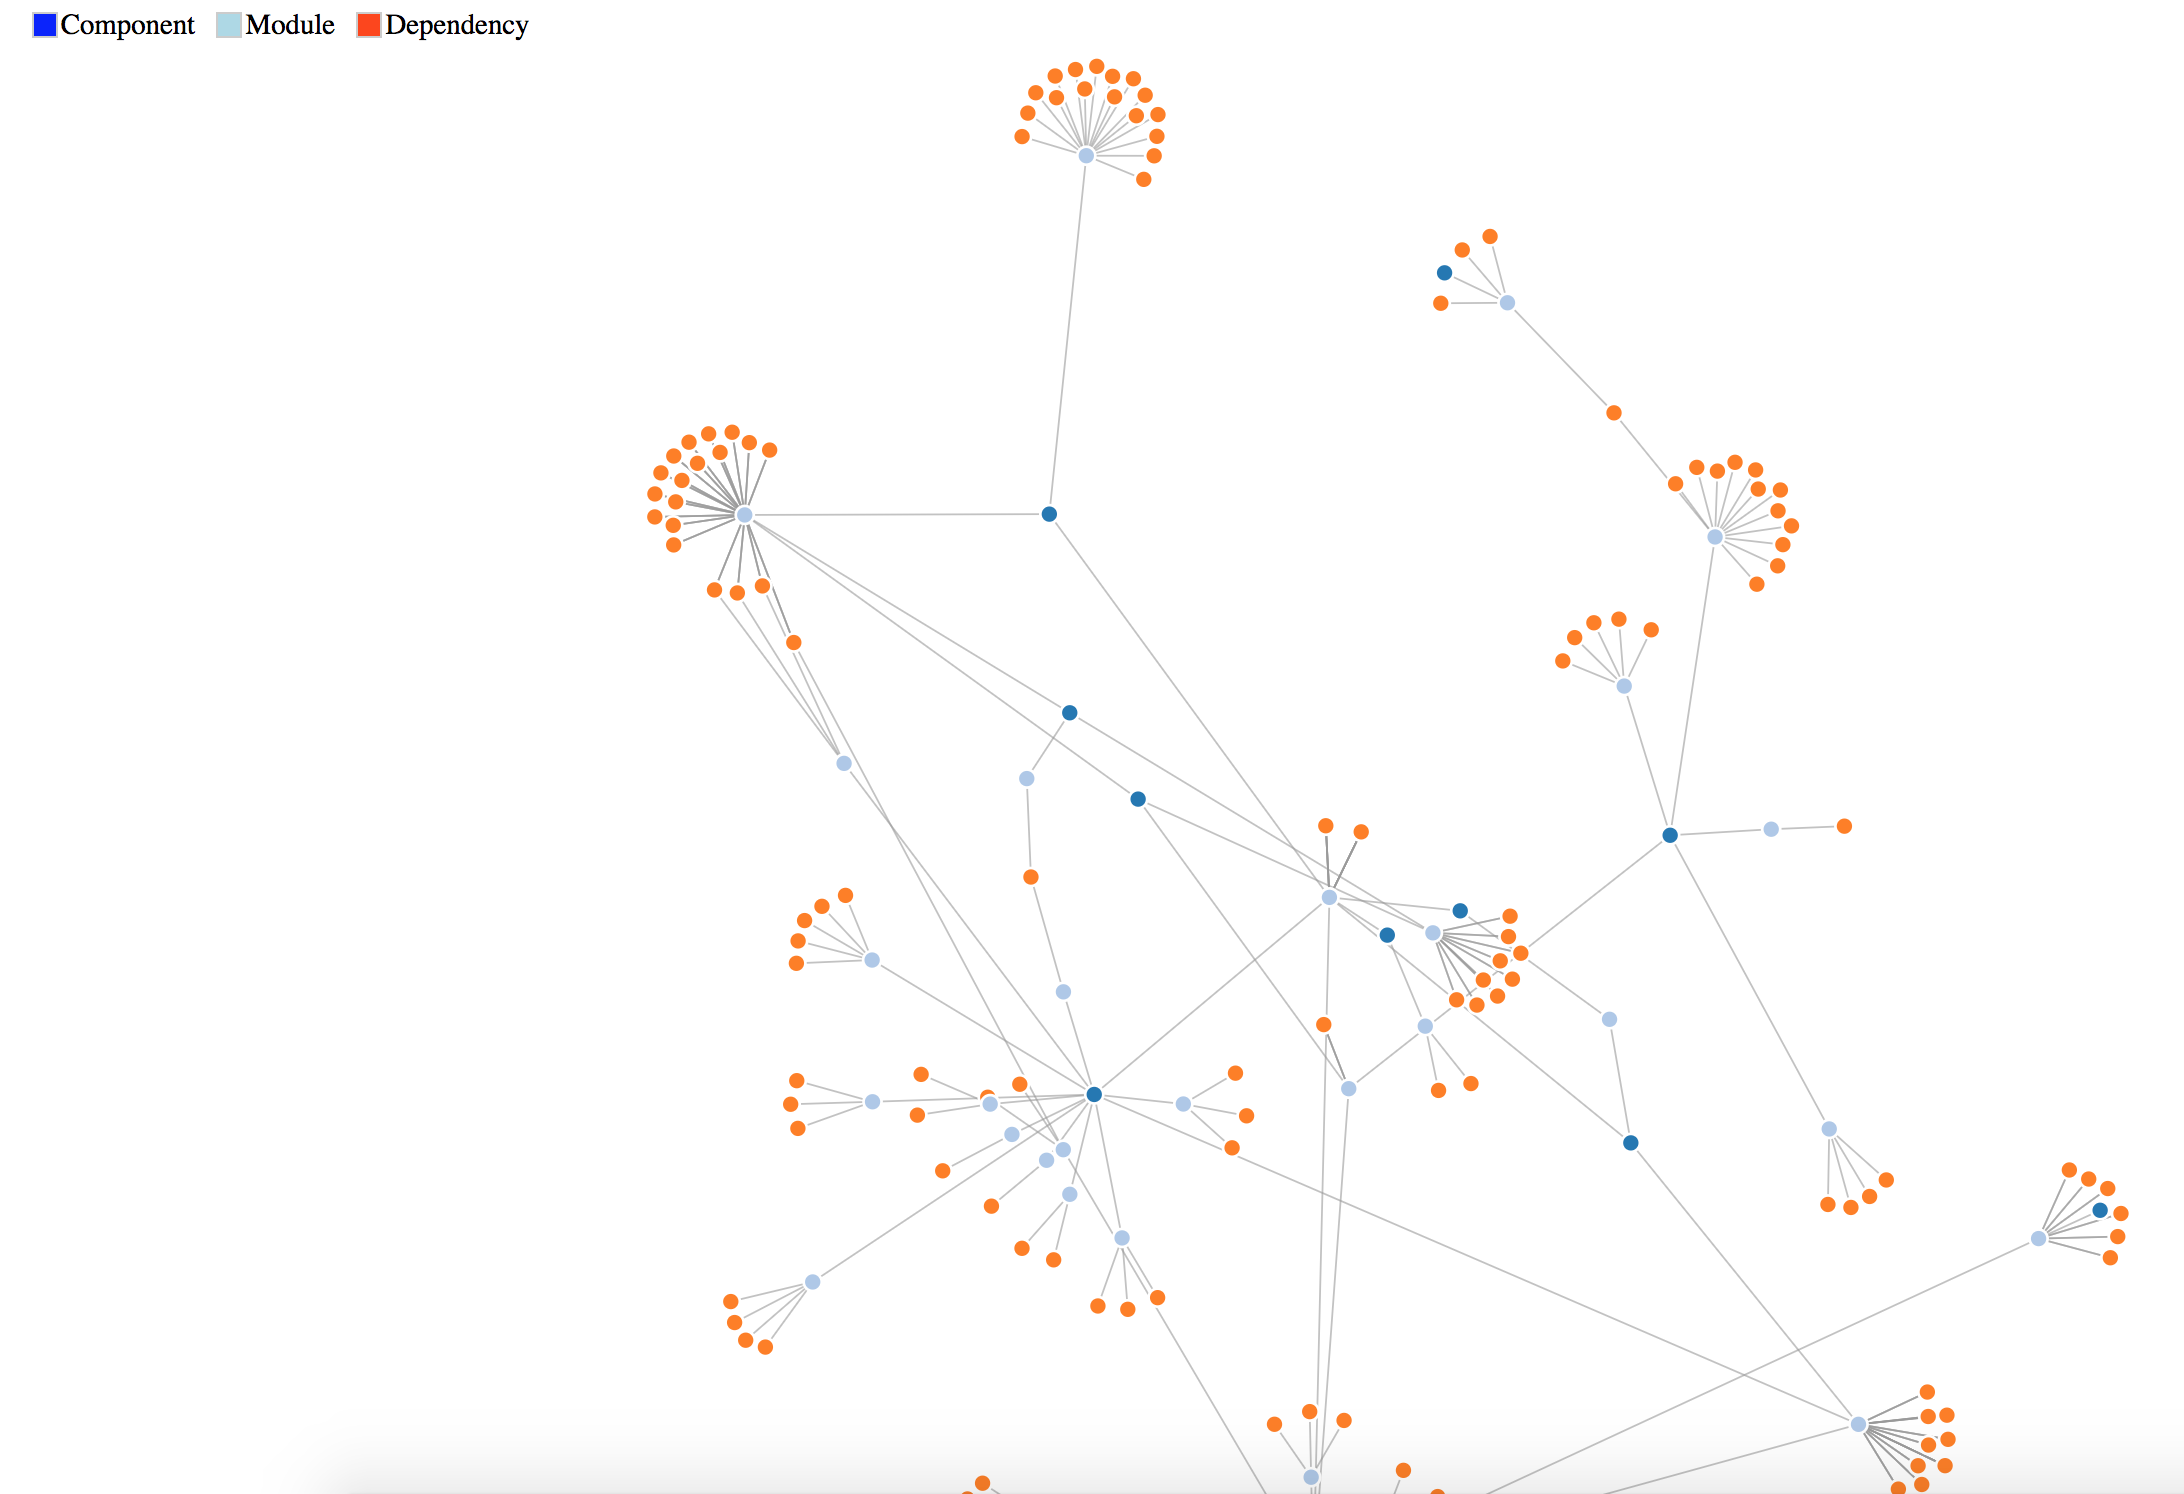 linked_node_graph.png